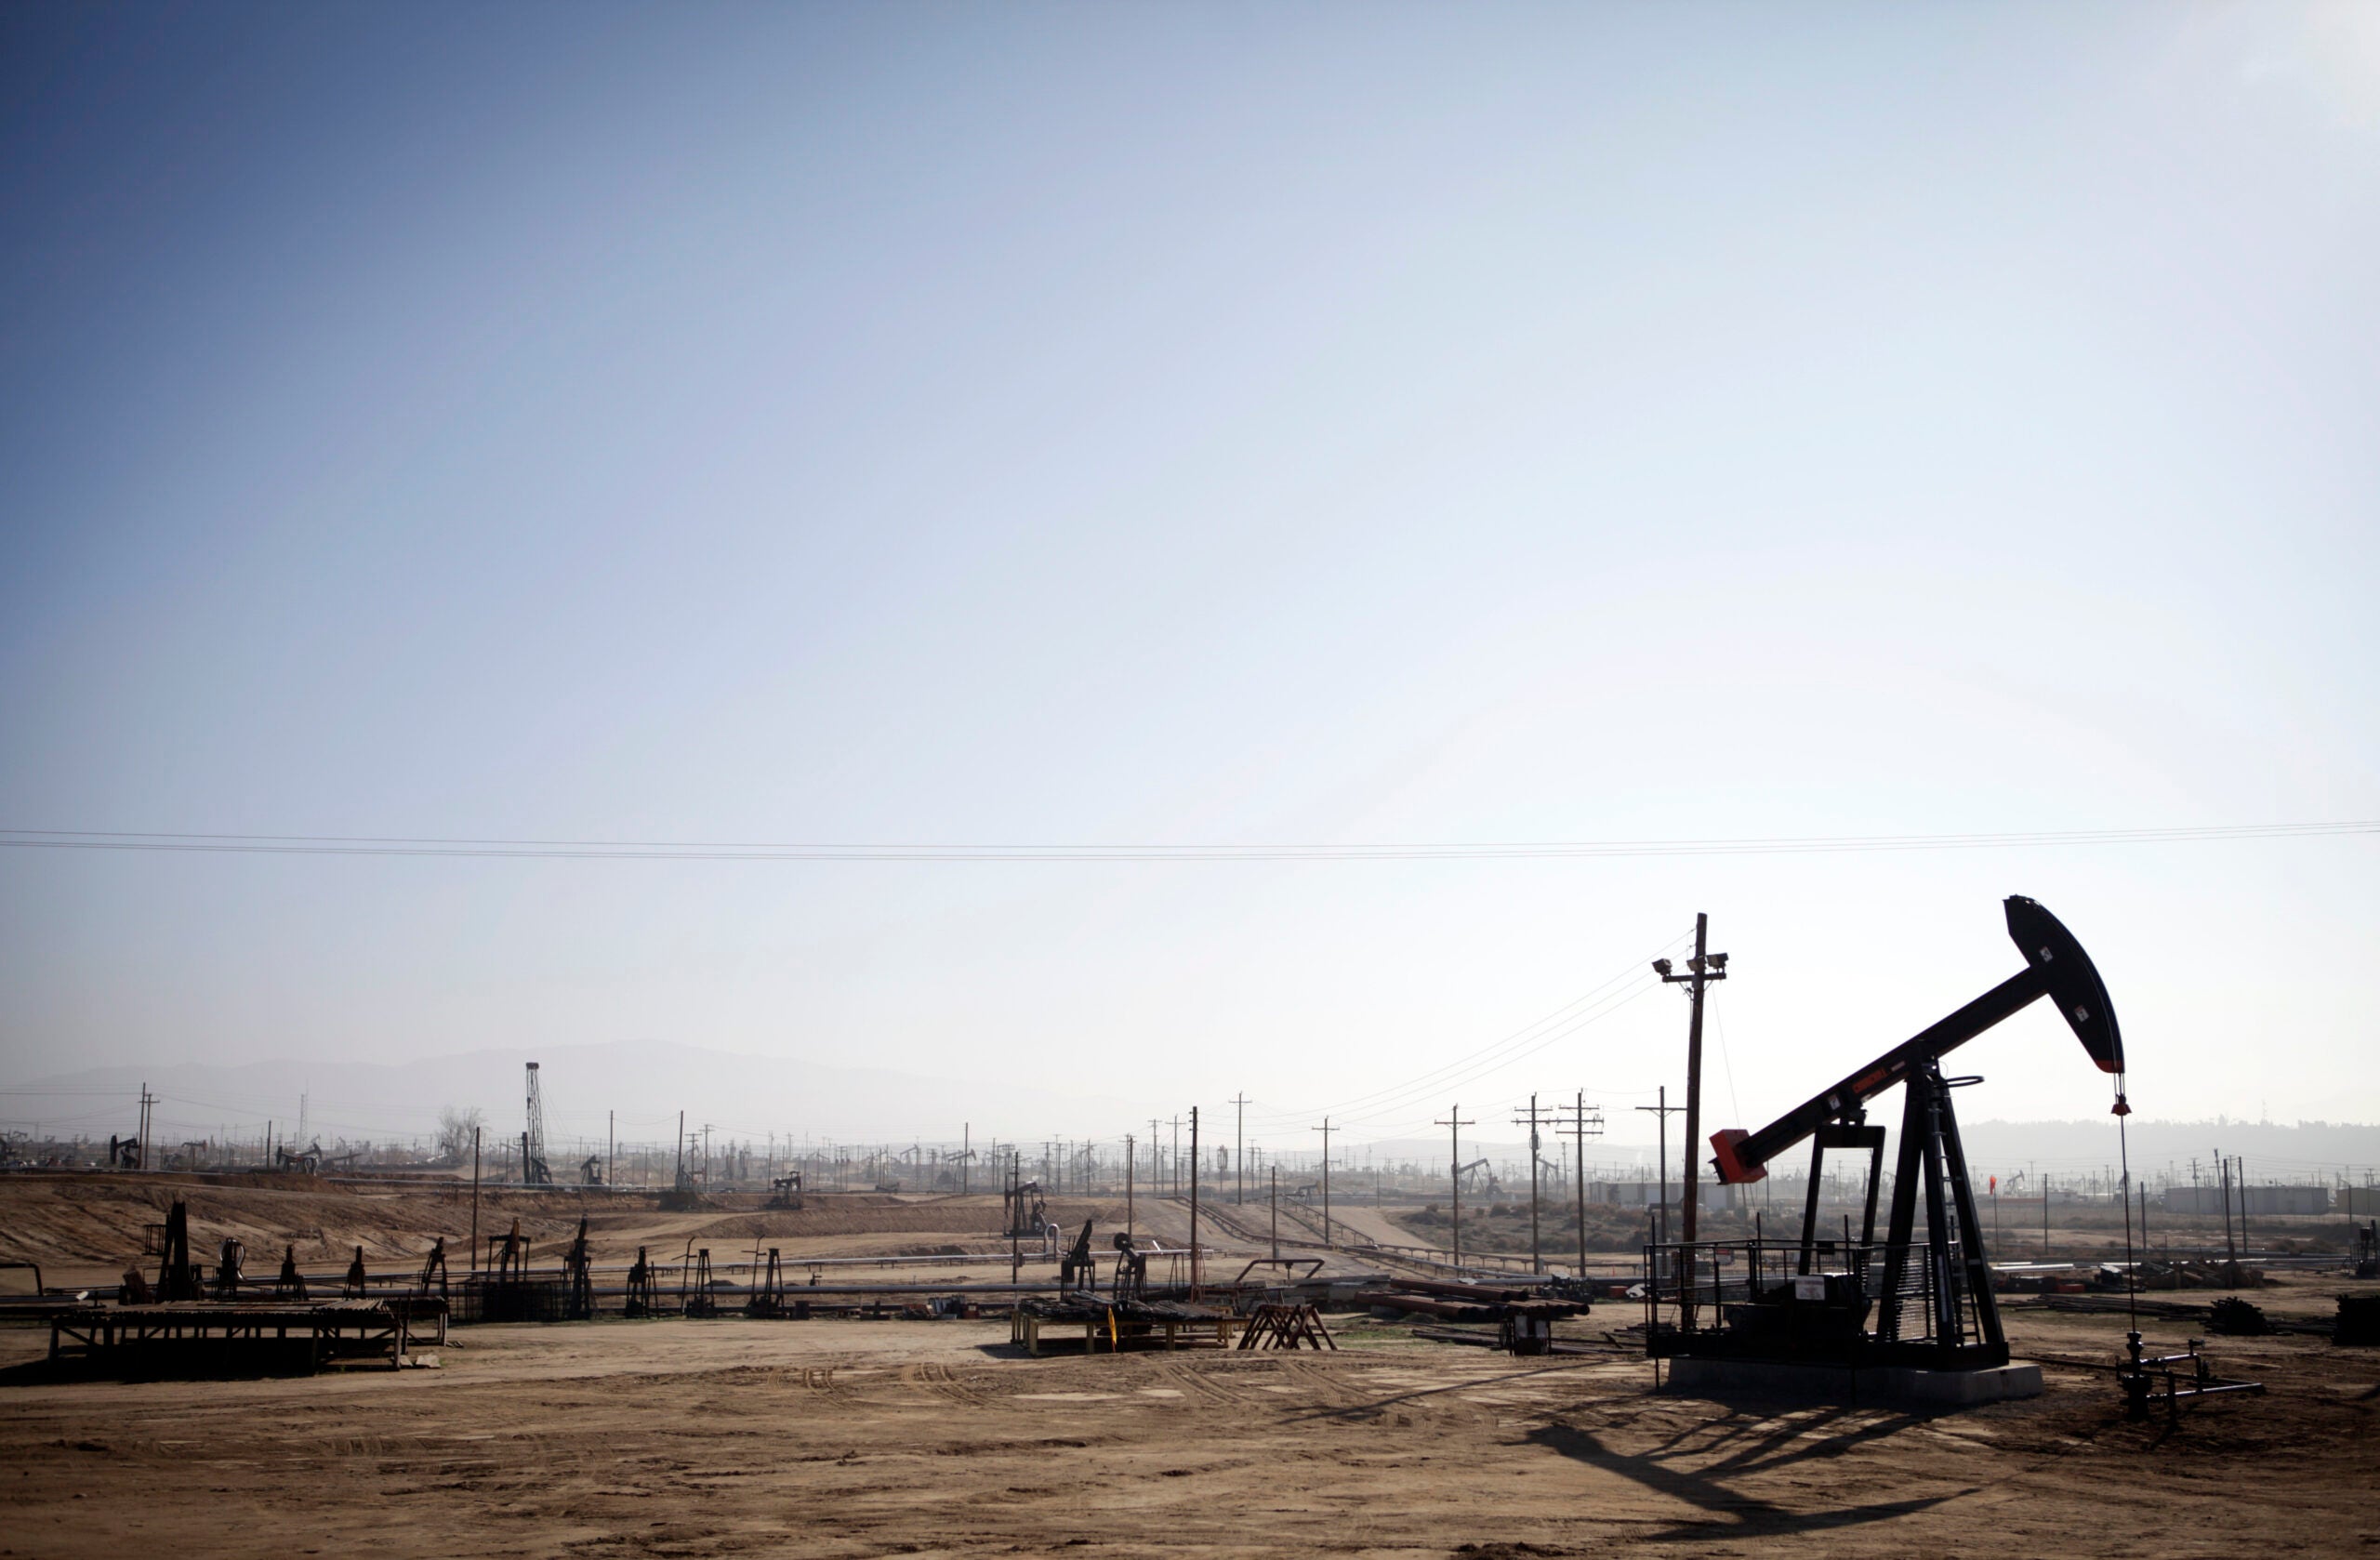 A sea of oil derricks on public lands in Kern County, California